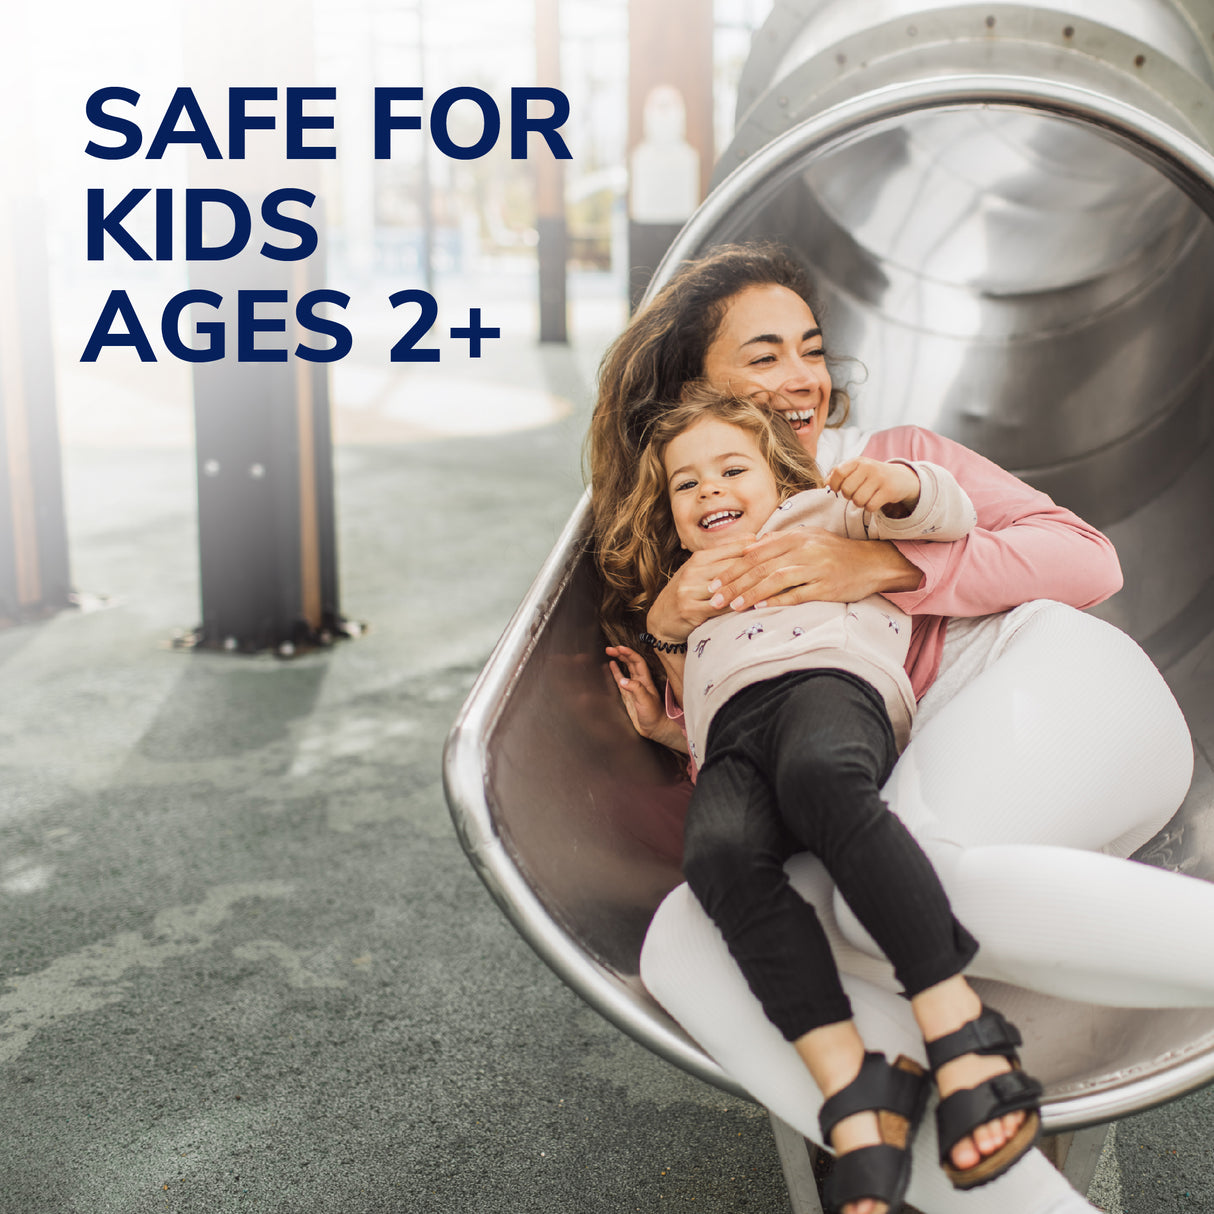 image of safe for kids ages 2+